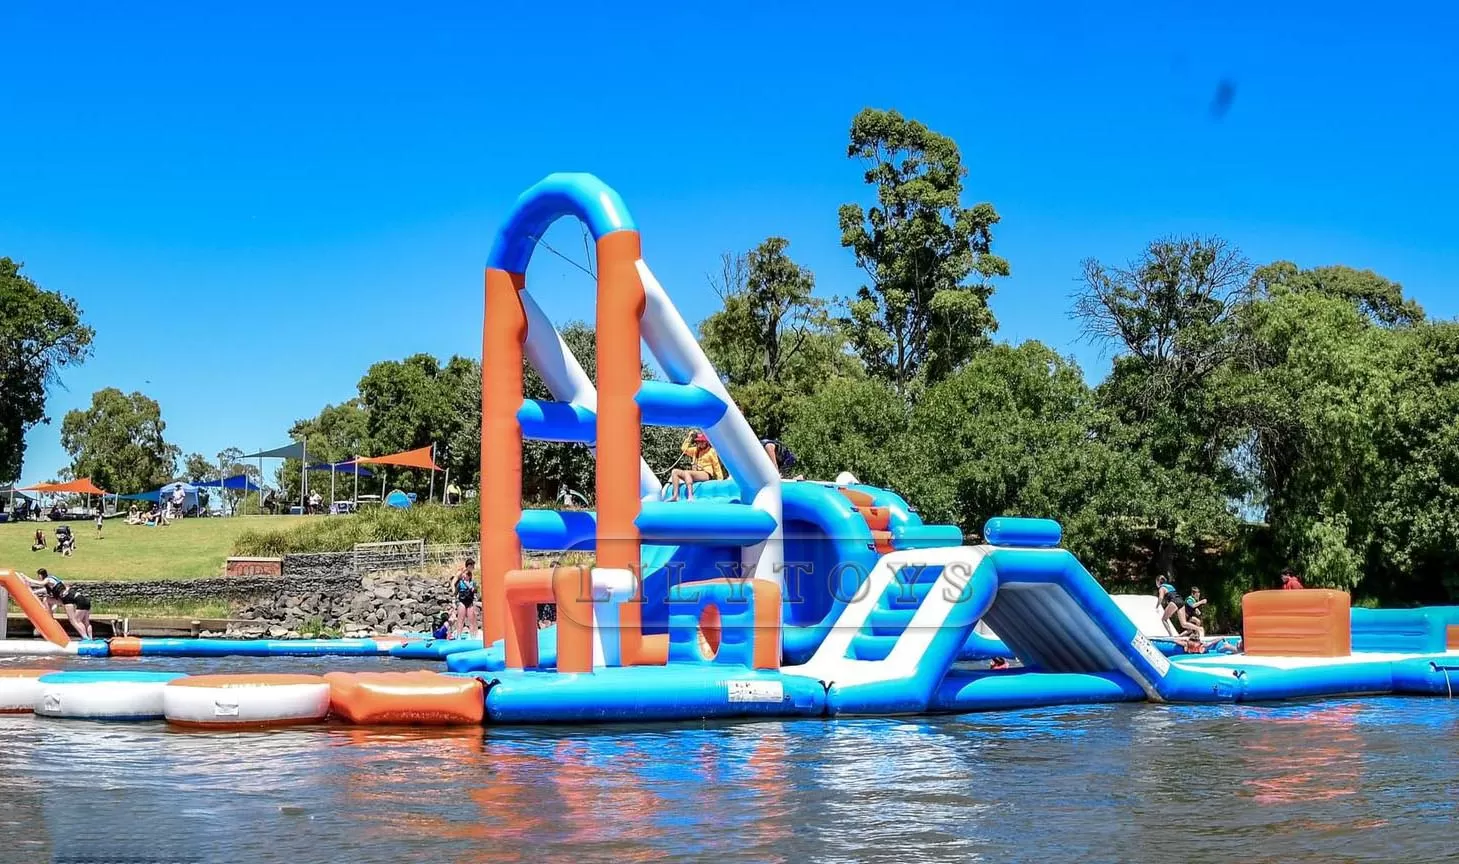 inflatable aqua park water park equipment for lake